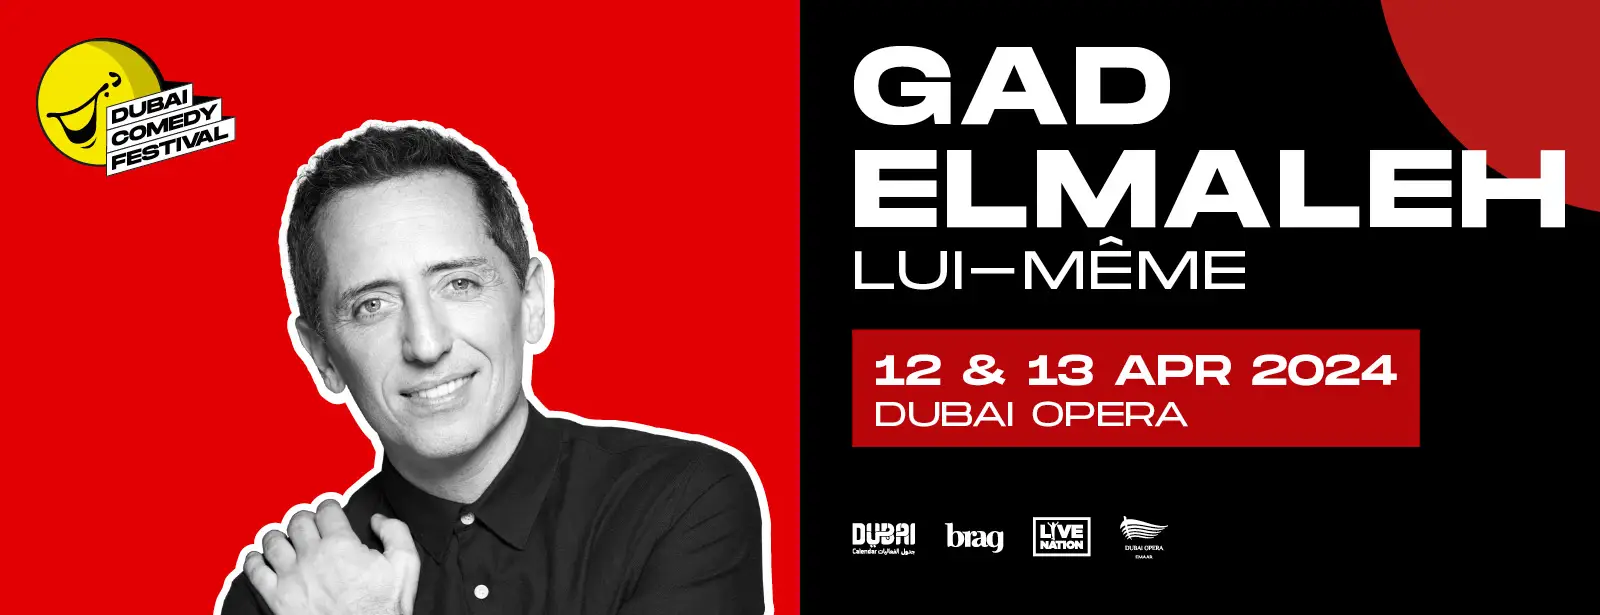 Dubai Comedy Festival presents Gad Elmaleh - LUI-MÊME at Dubai Opera || Wow Emirates